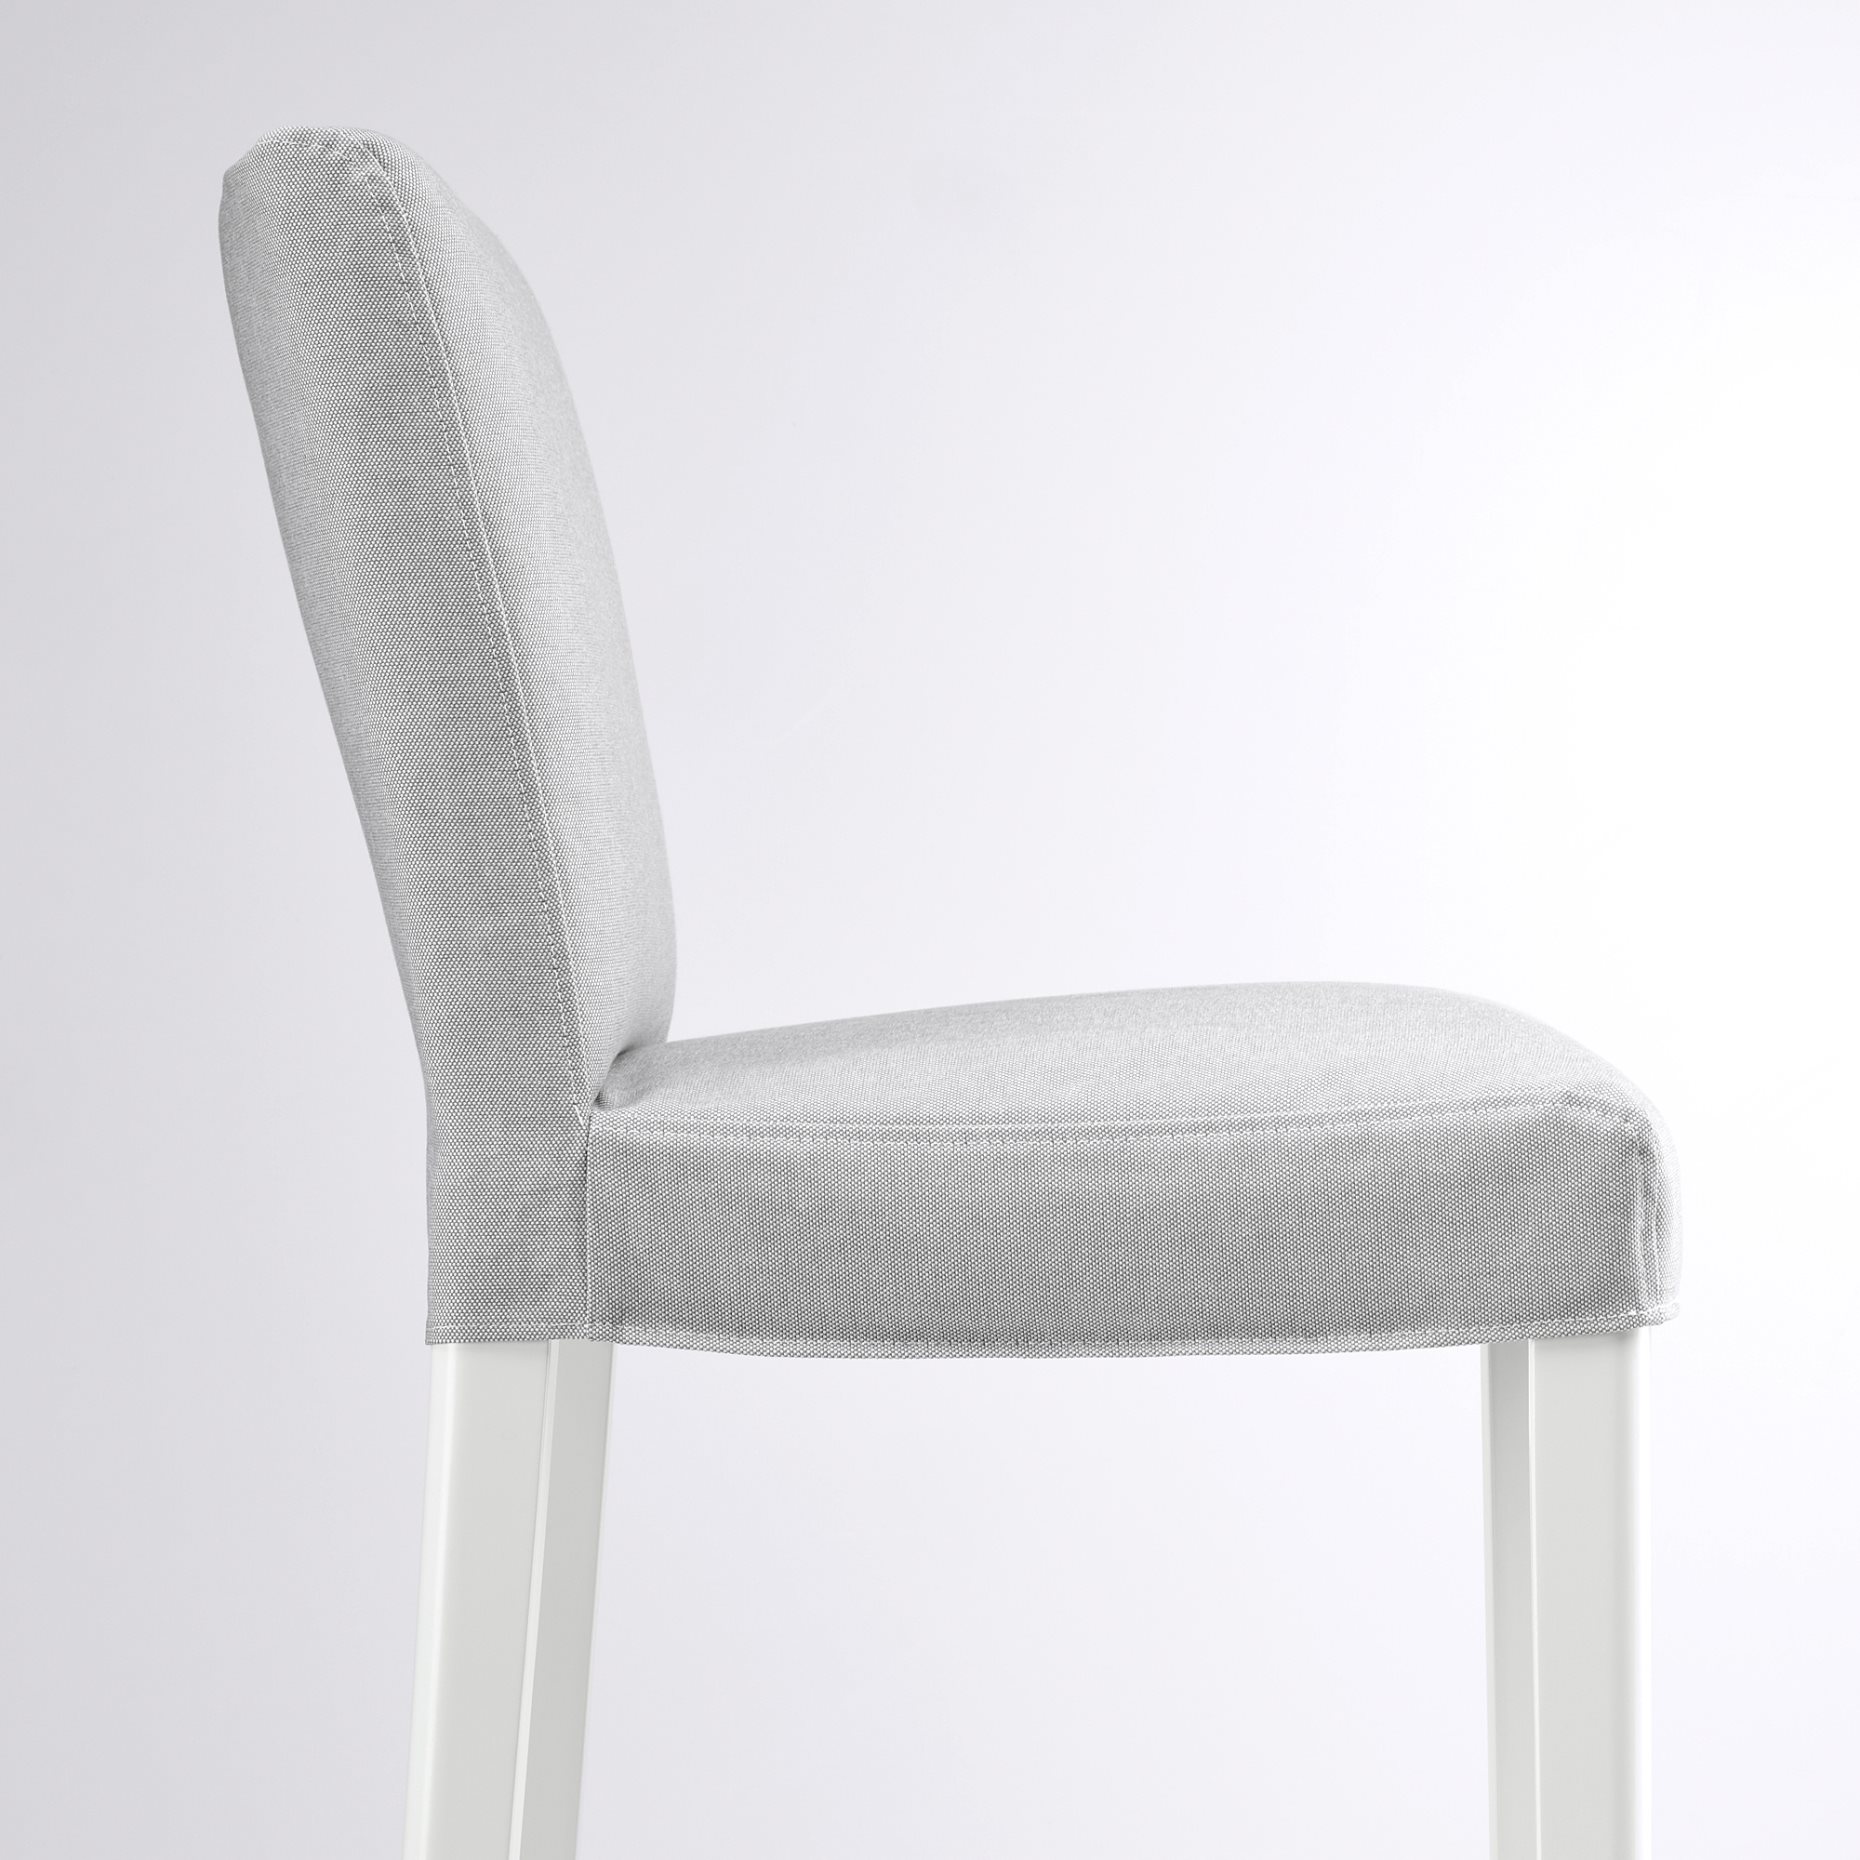 BERGMUND, bar stool with backrest, 62 cm, 393.882.03